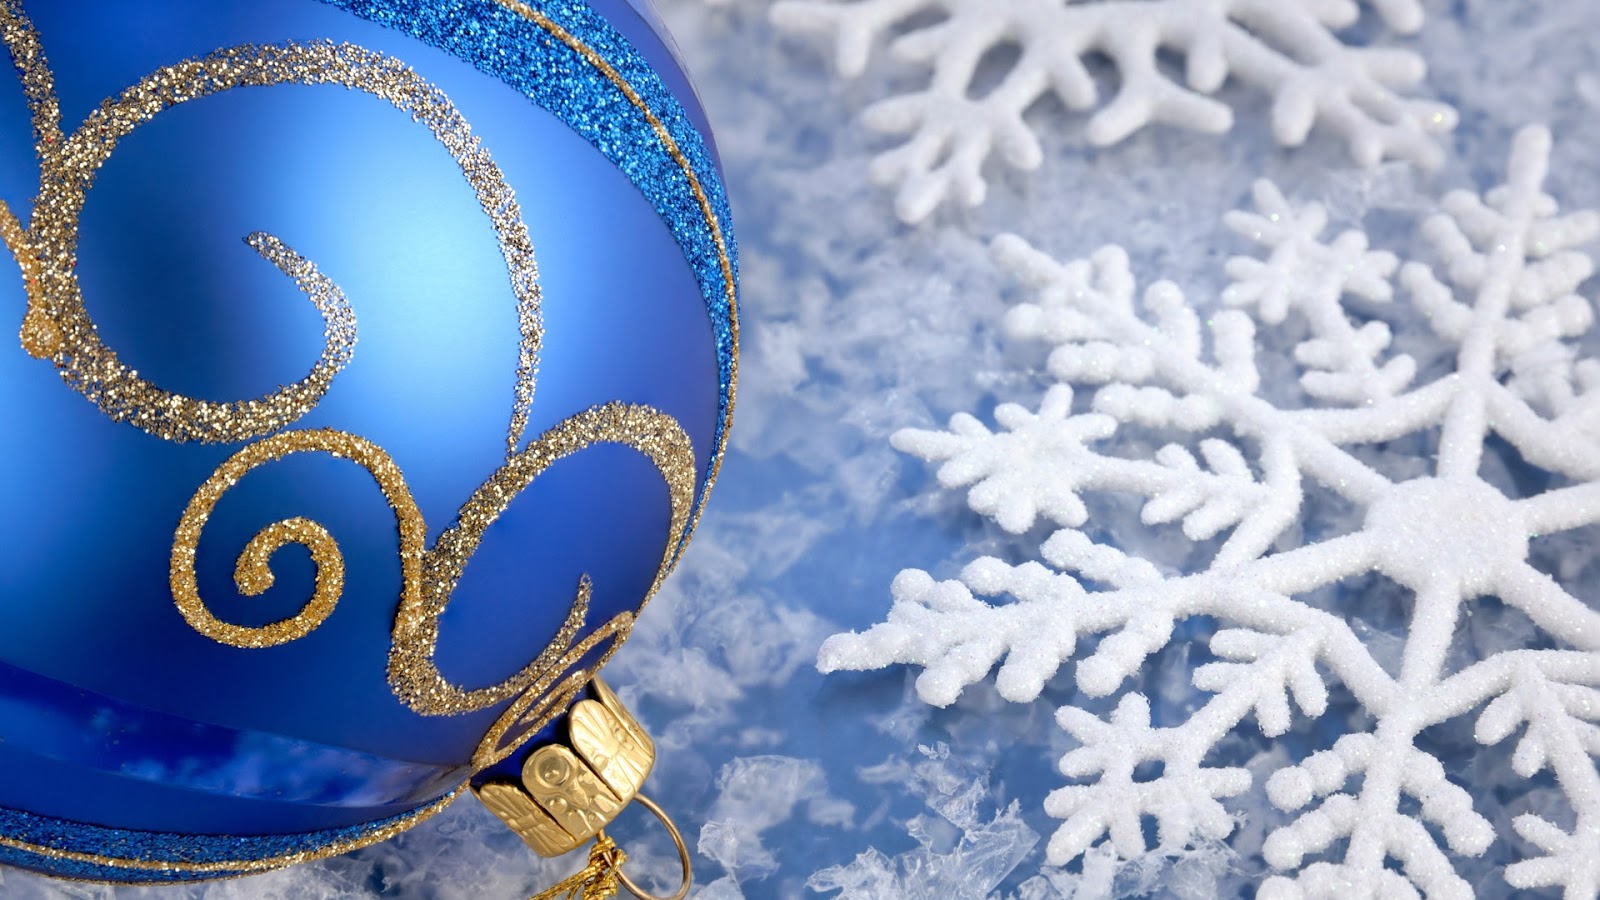 free christmas wallpaper,blue,winter,christmas ornament,world,sky